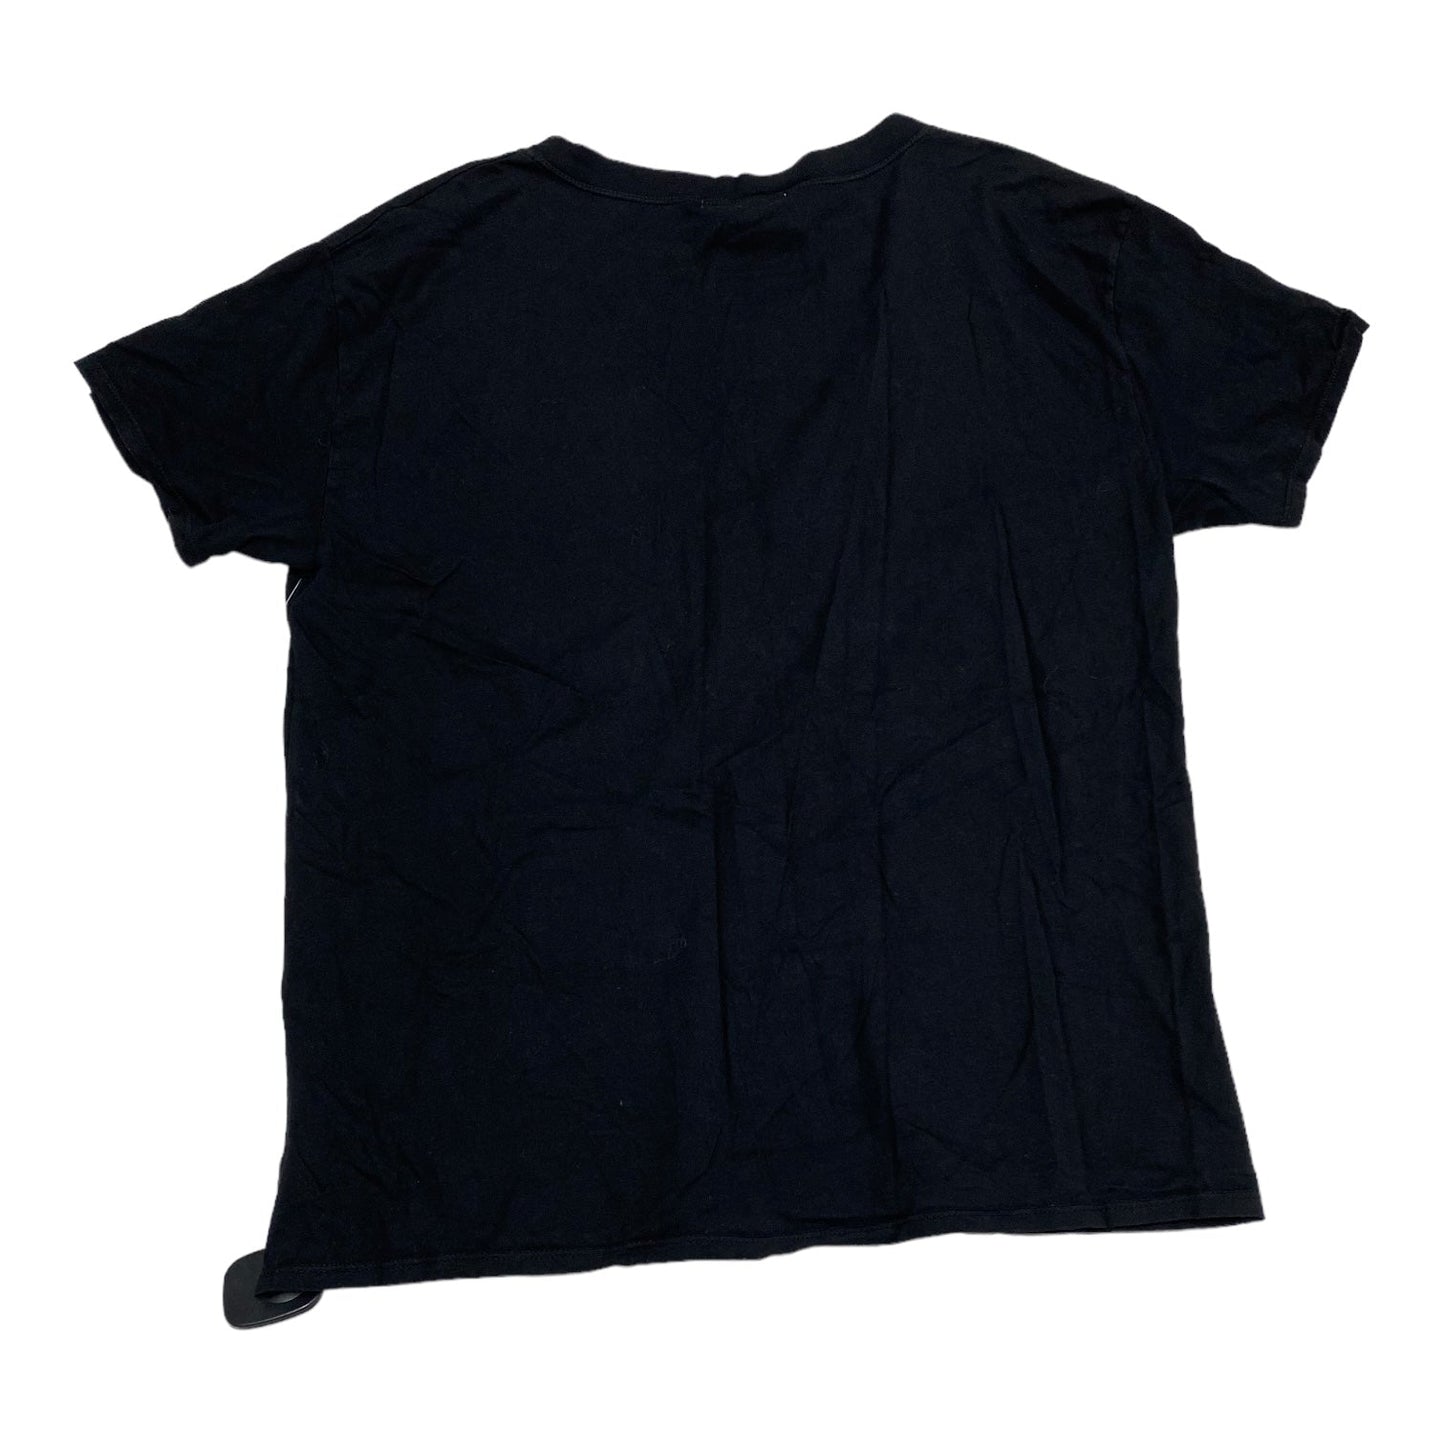 Black Top Short Sleeve Basic Good American, Size L